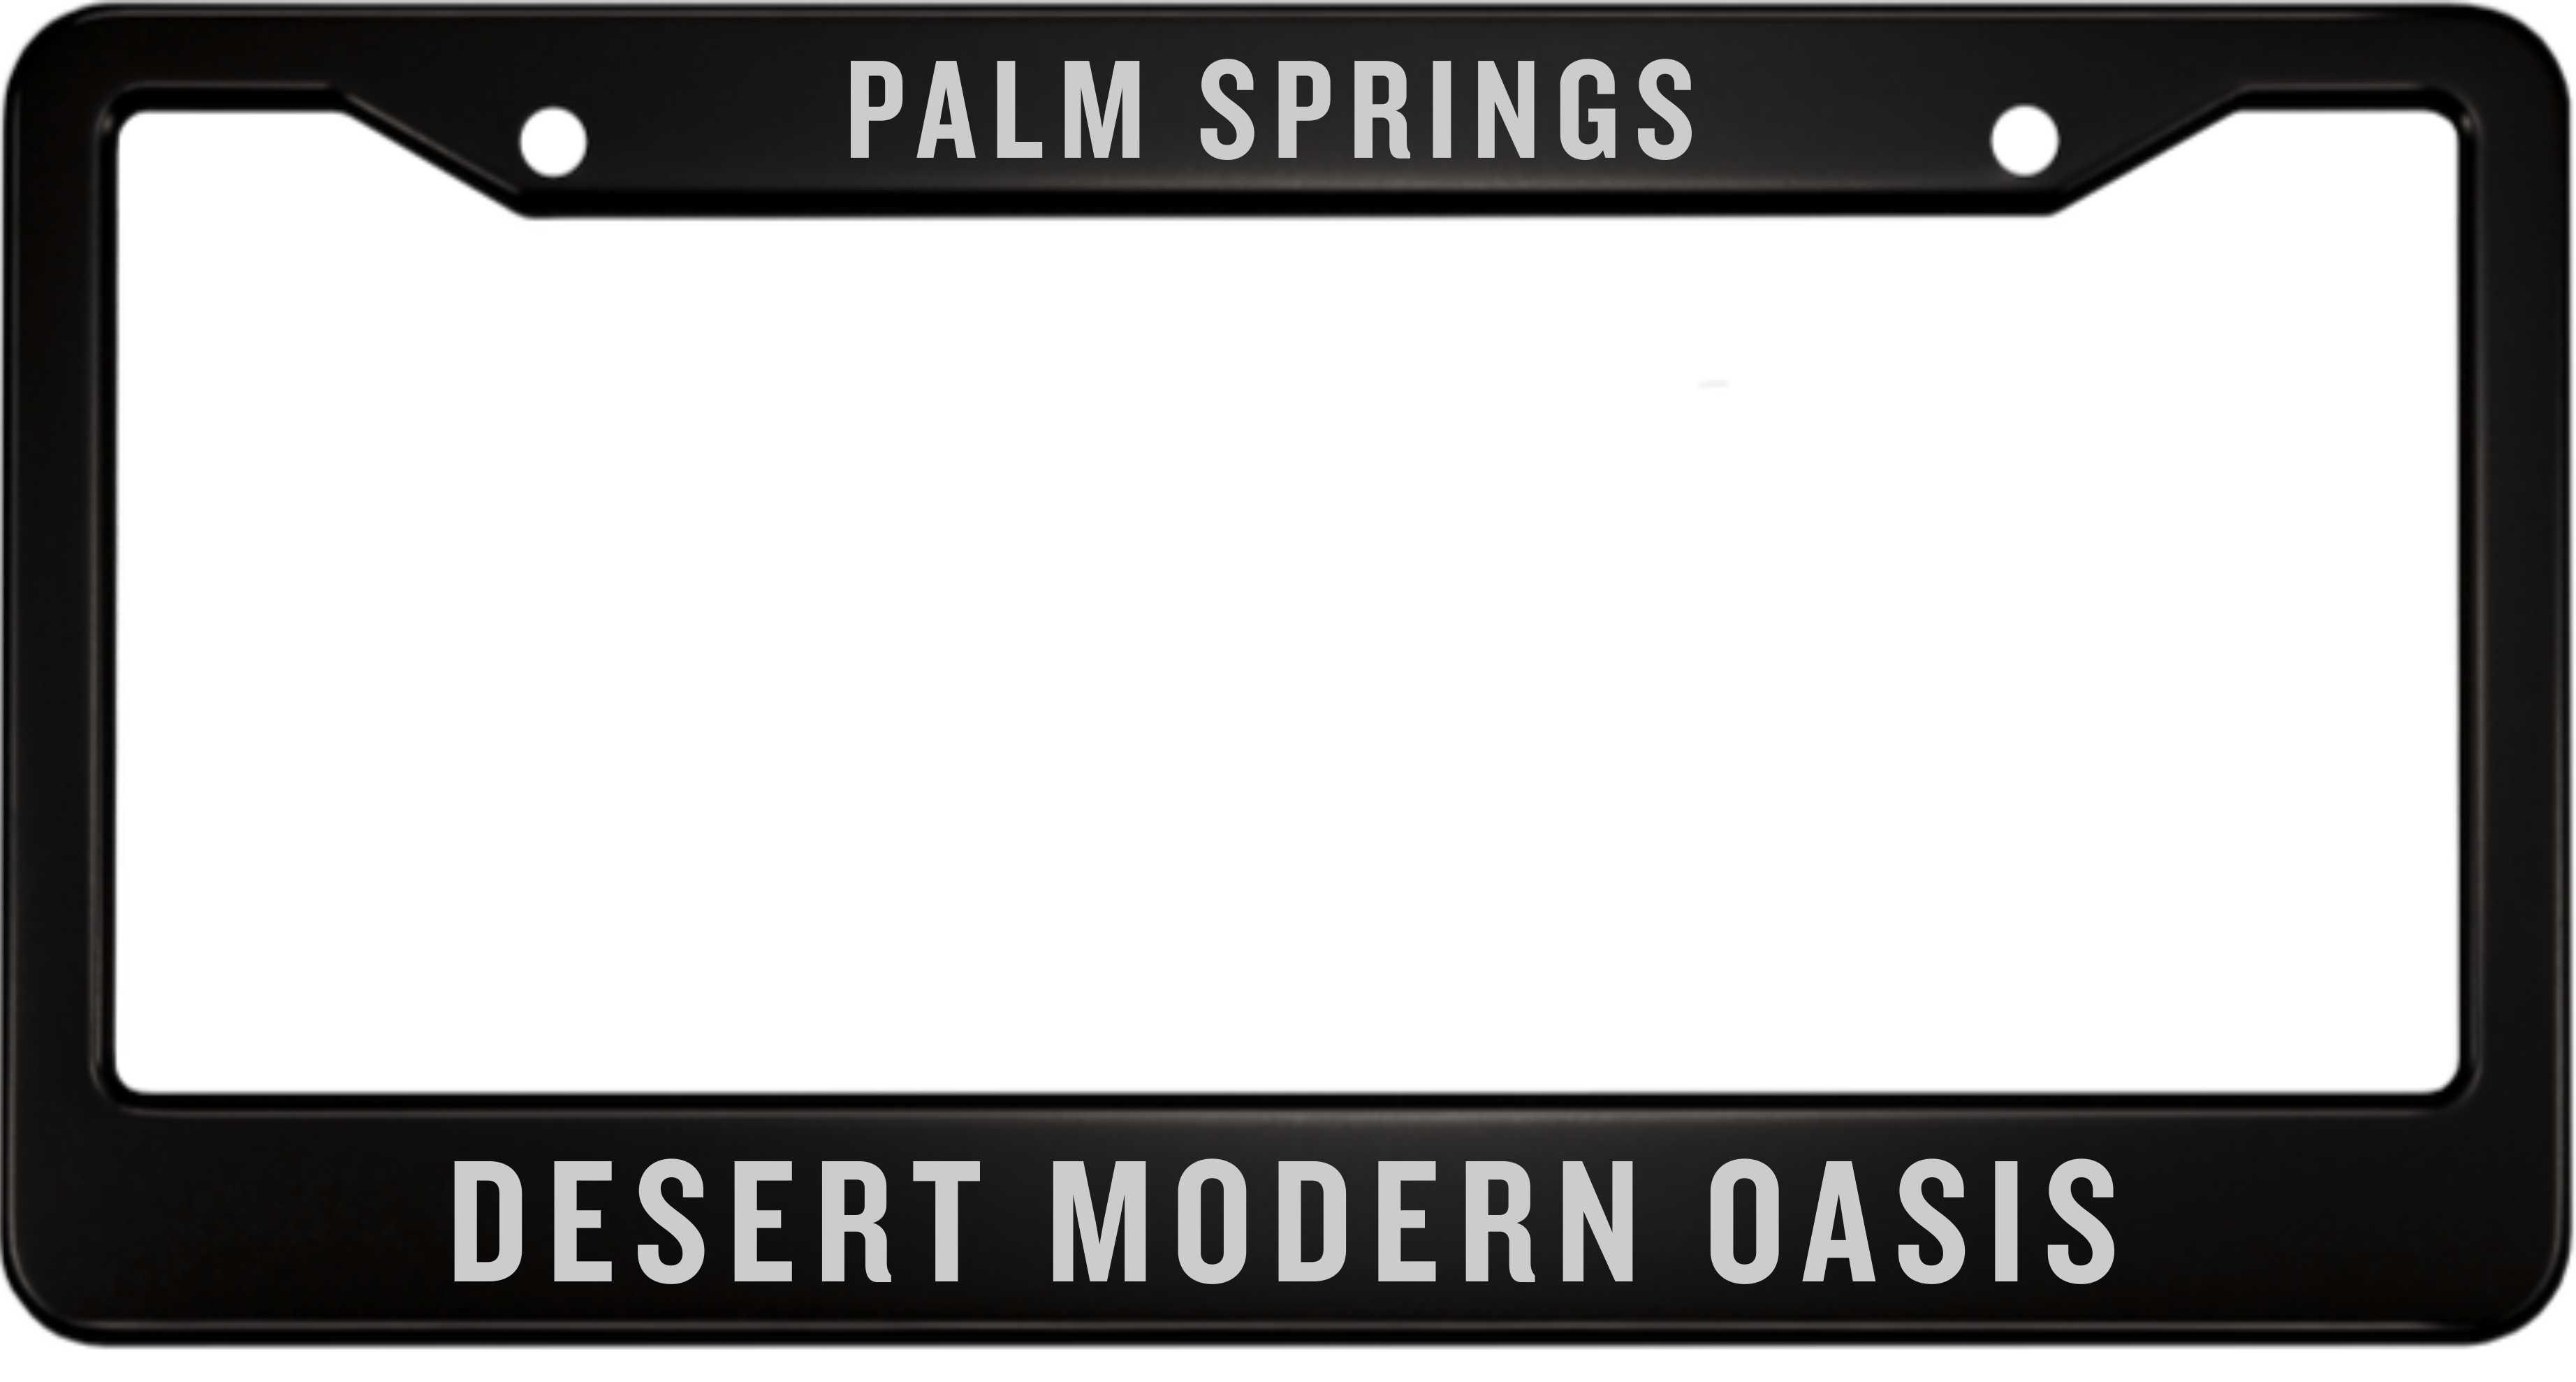 Palm Springs Aluminum License Plate Frame